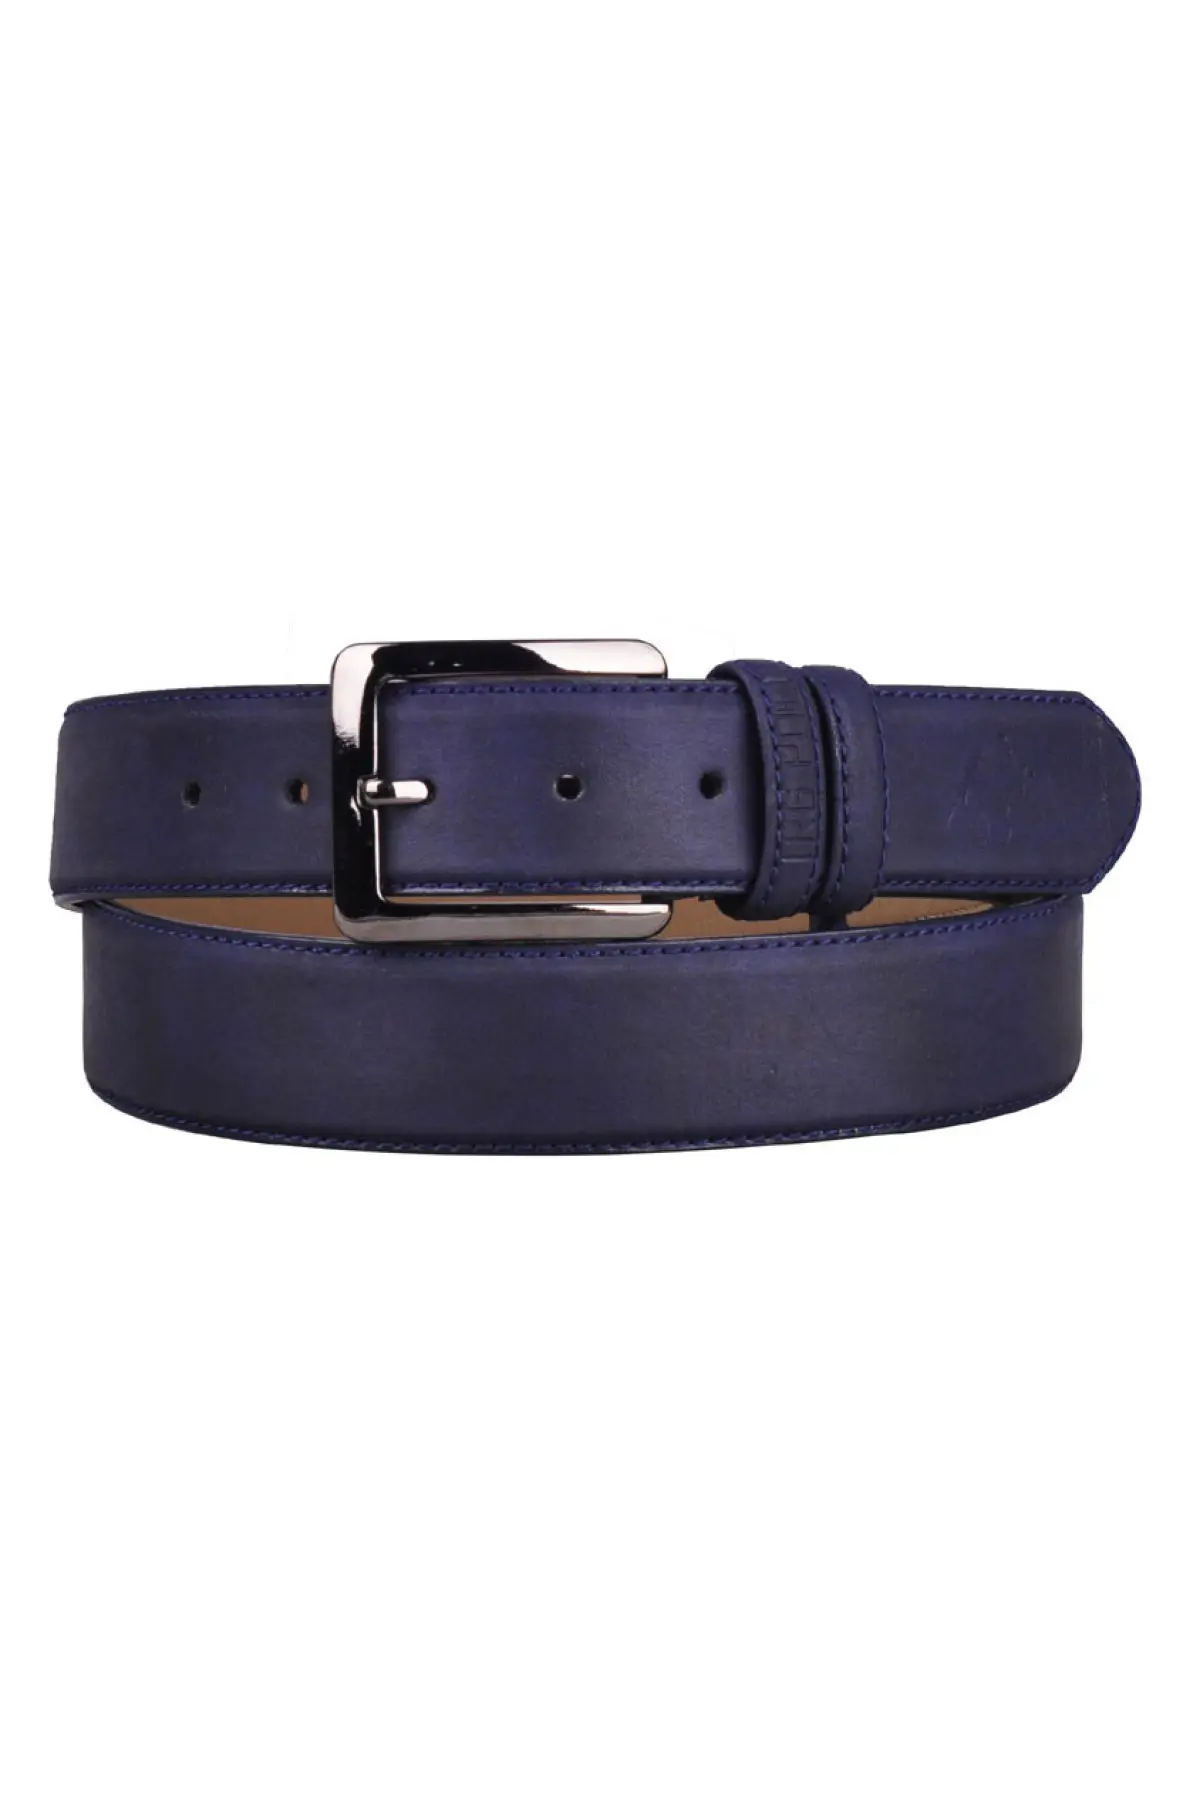 Trg Polo Artificial Leather-Classic Men's Belt, Five Different Color Options, 4 Cm Width, 105-130 Cm Length, Special Logo Design